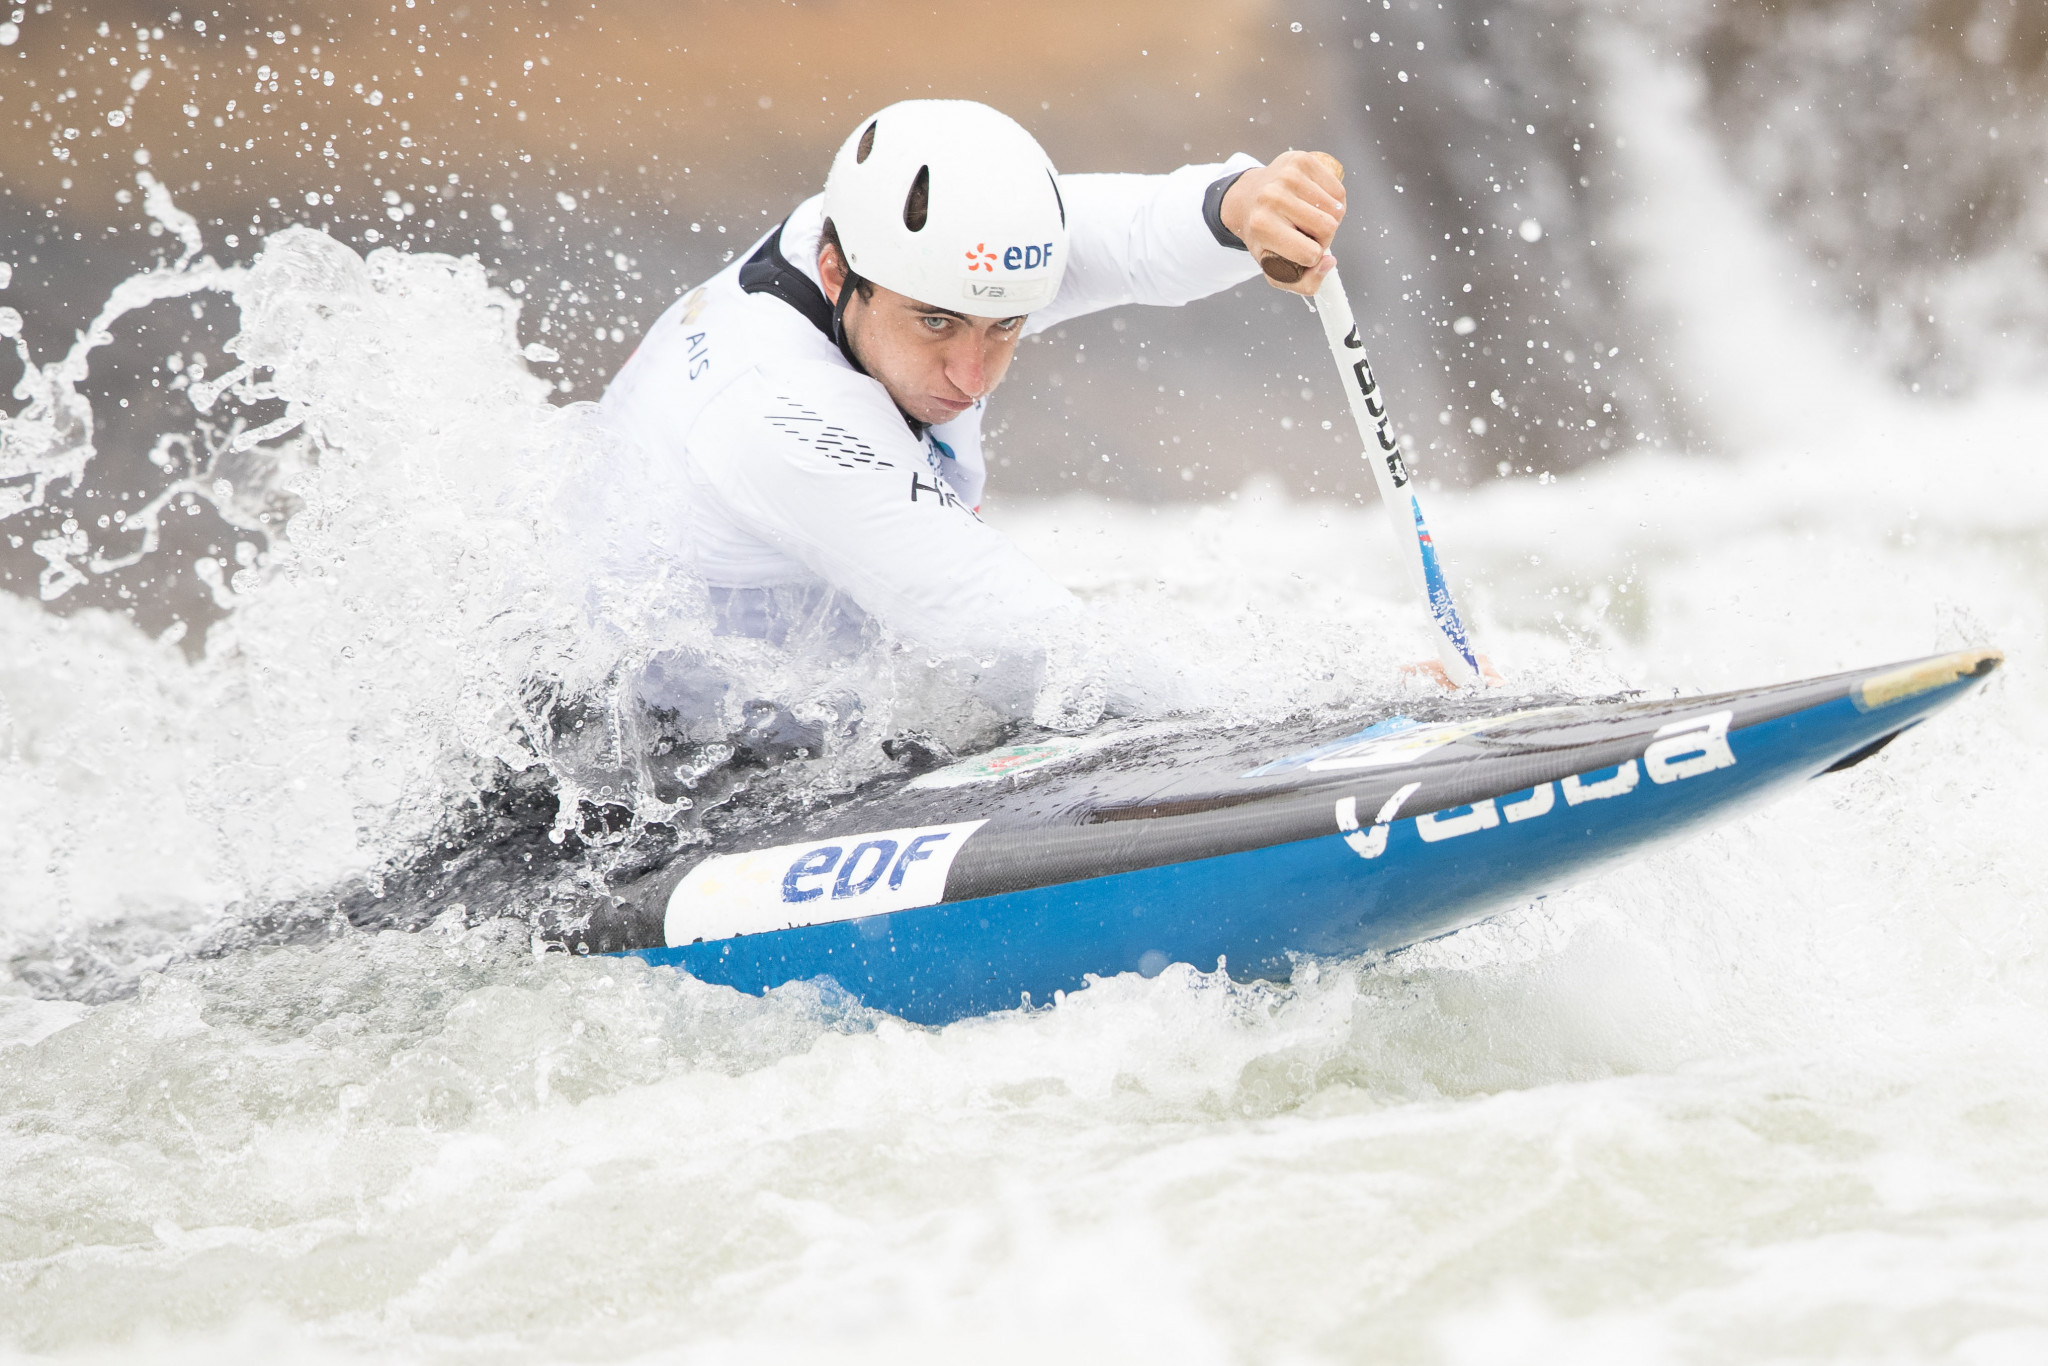 Markkleeberg set to host second event of ICF Canoe Slalom World Cup season